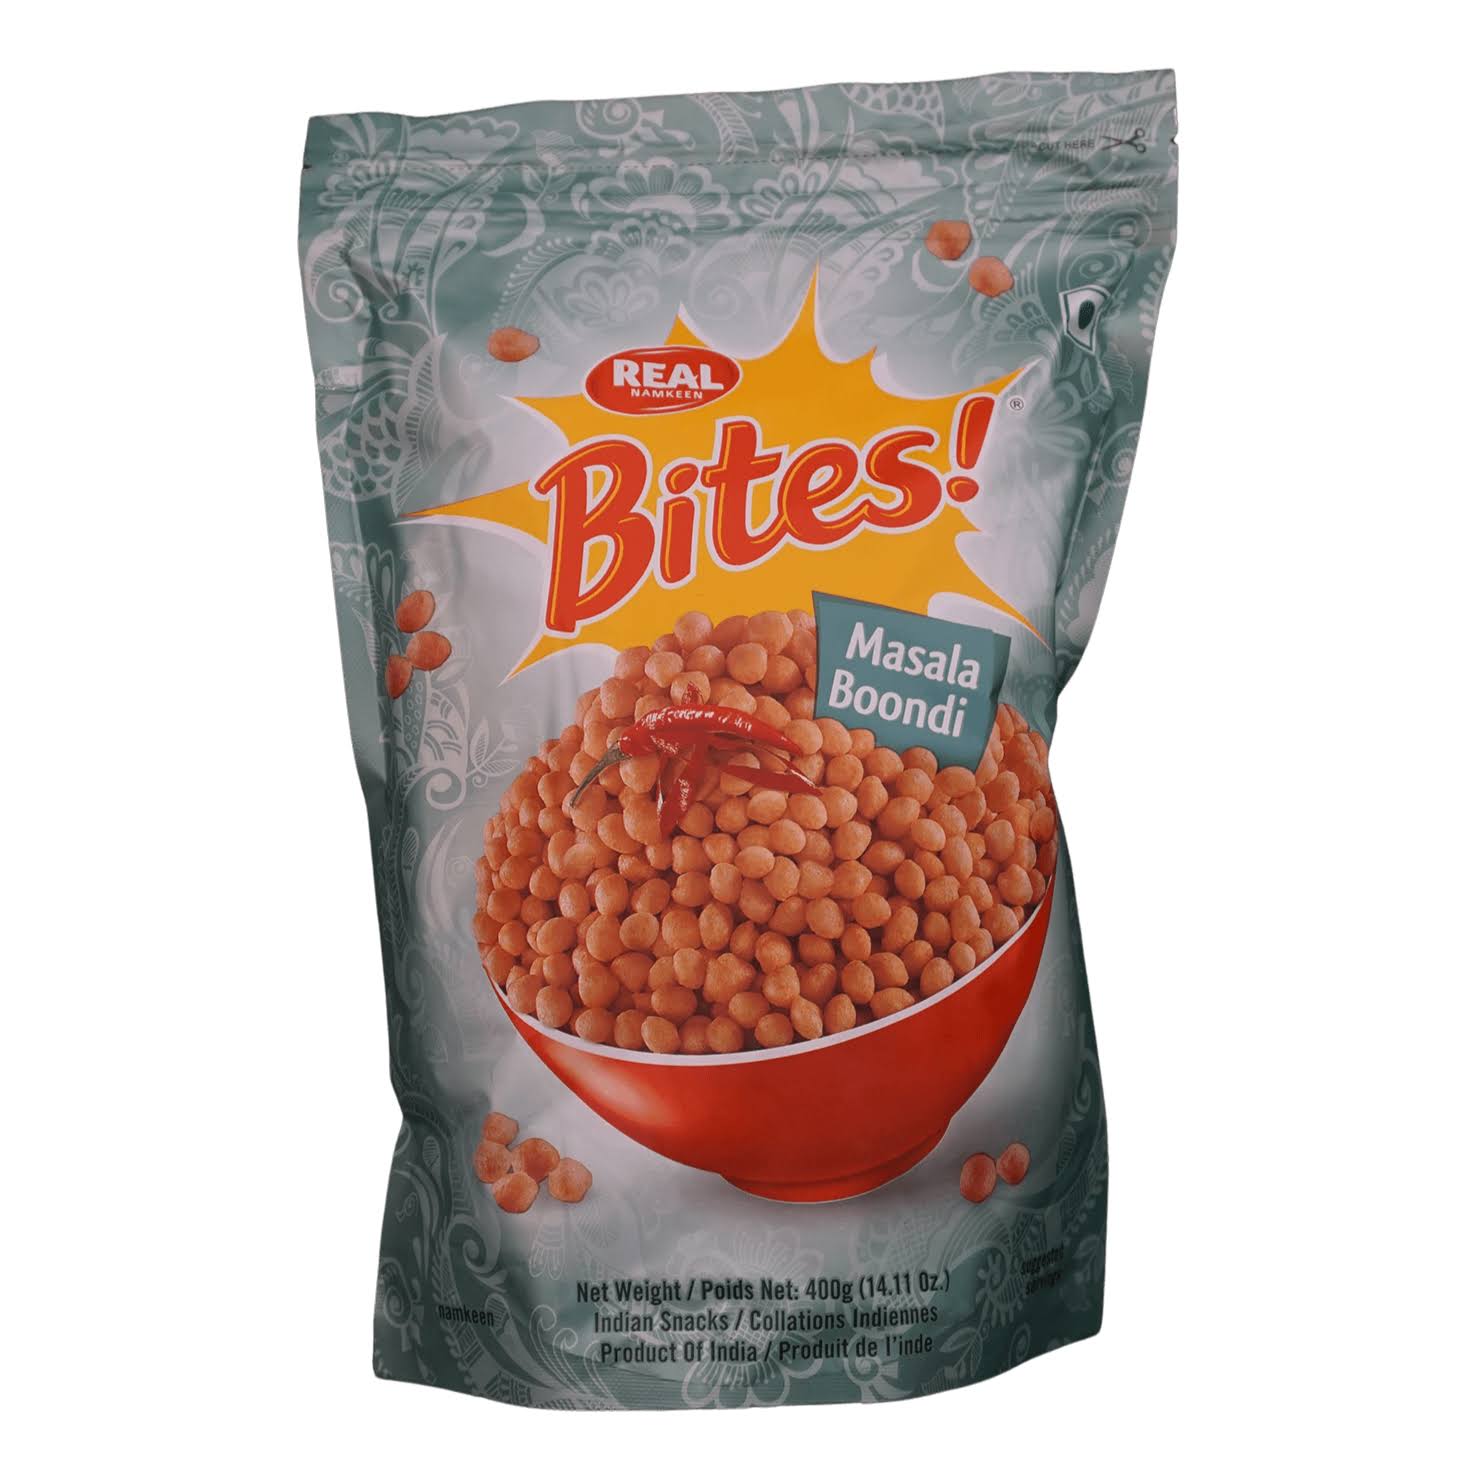 Real Bites Masala Boondi, 400g